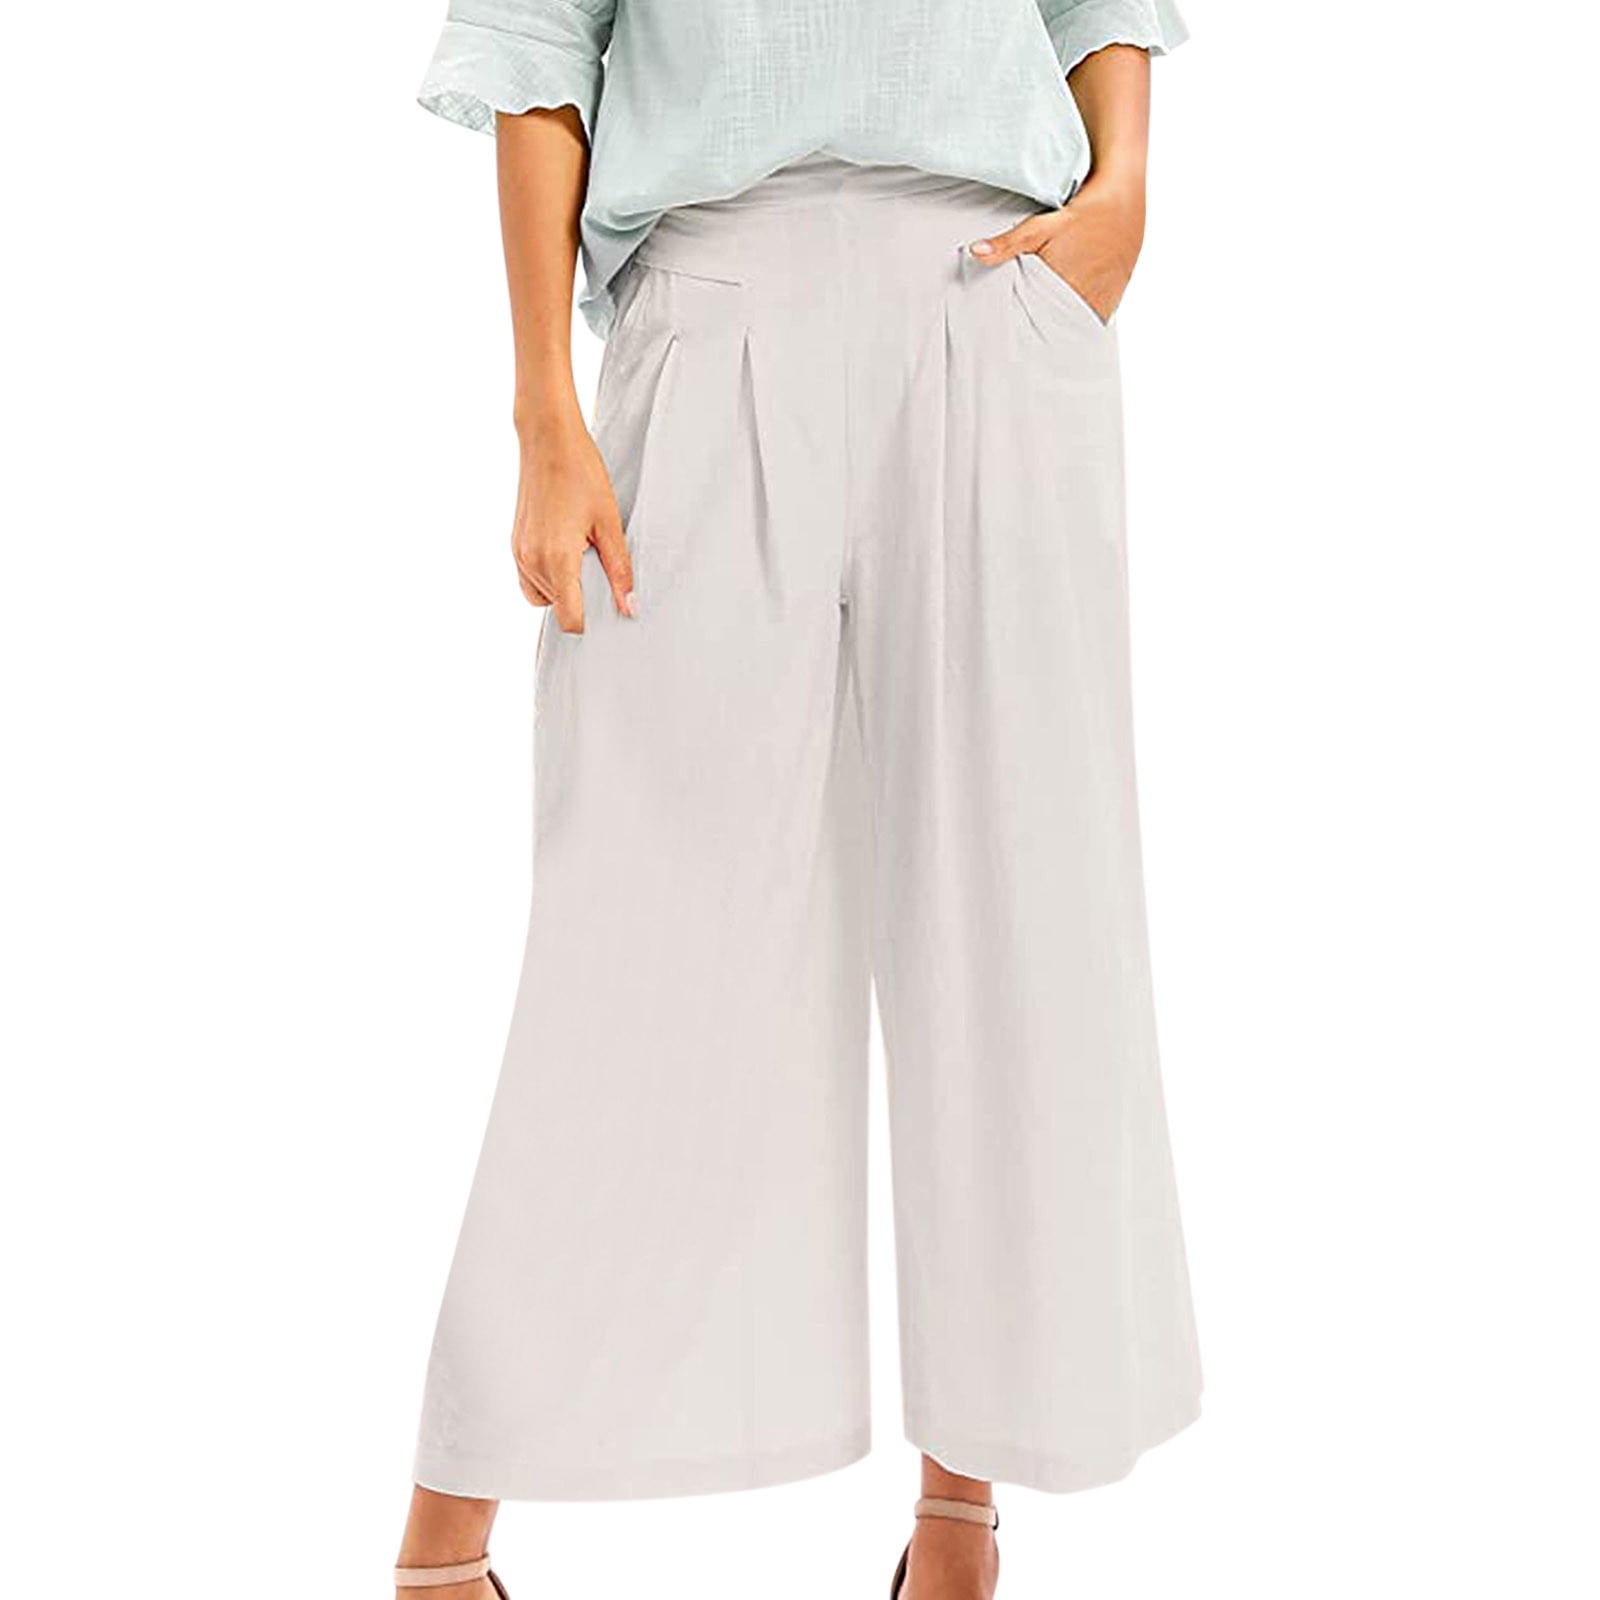 Avery cotton culotte pants | Stylins.co